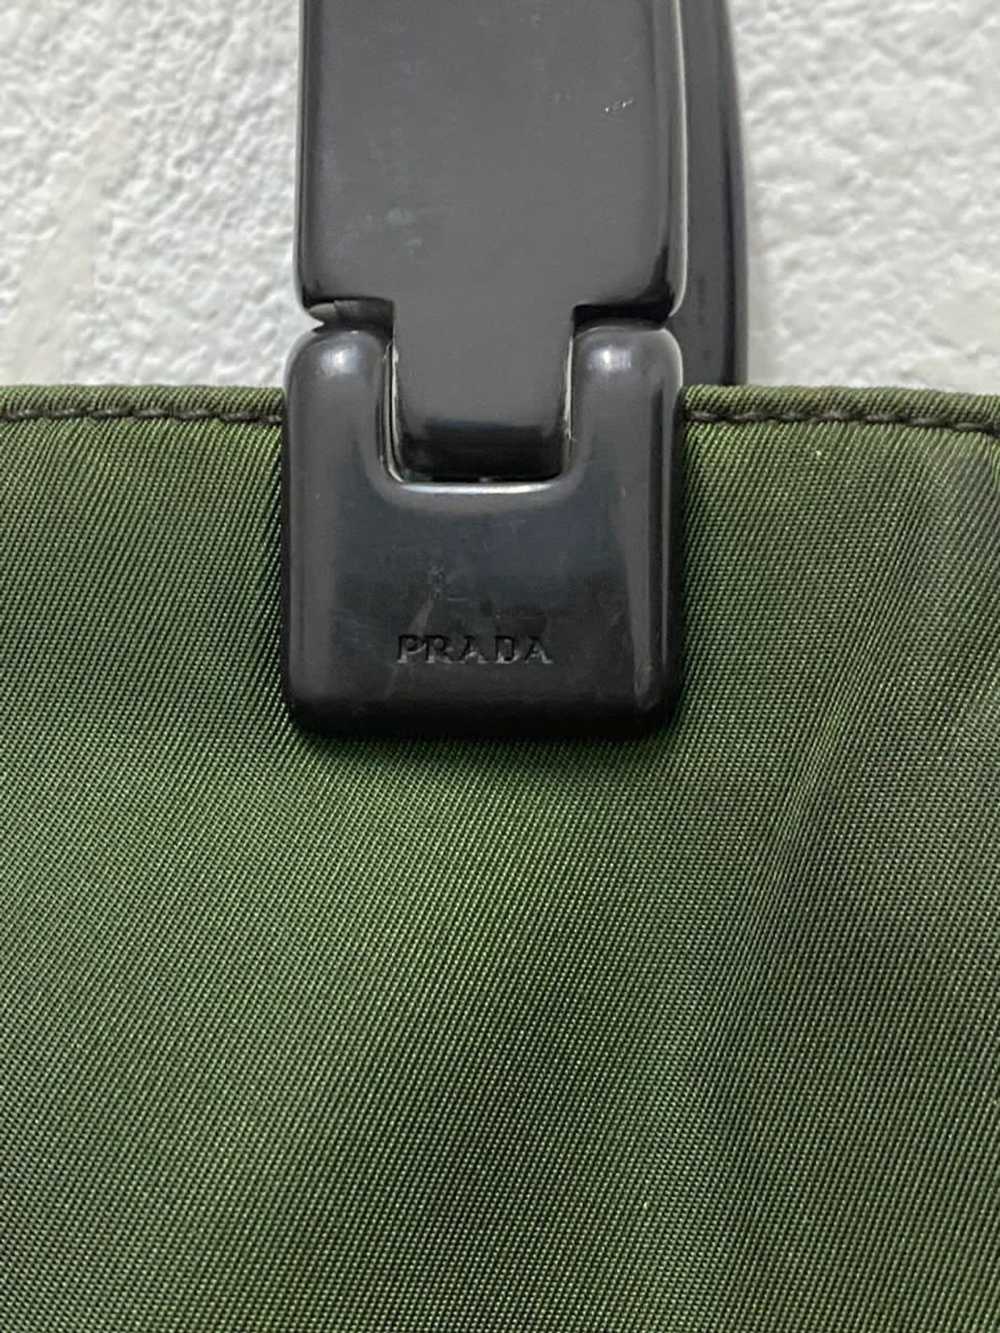 Prada Prada plastic handle handbag nylon - image 7